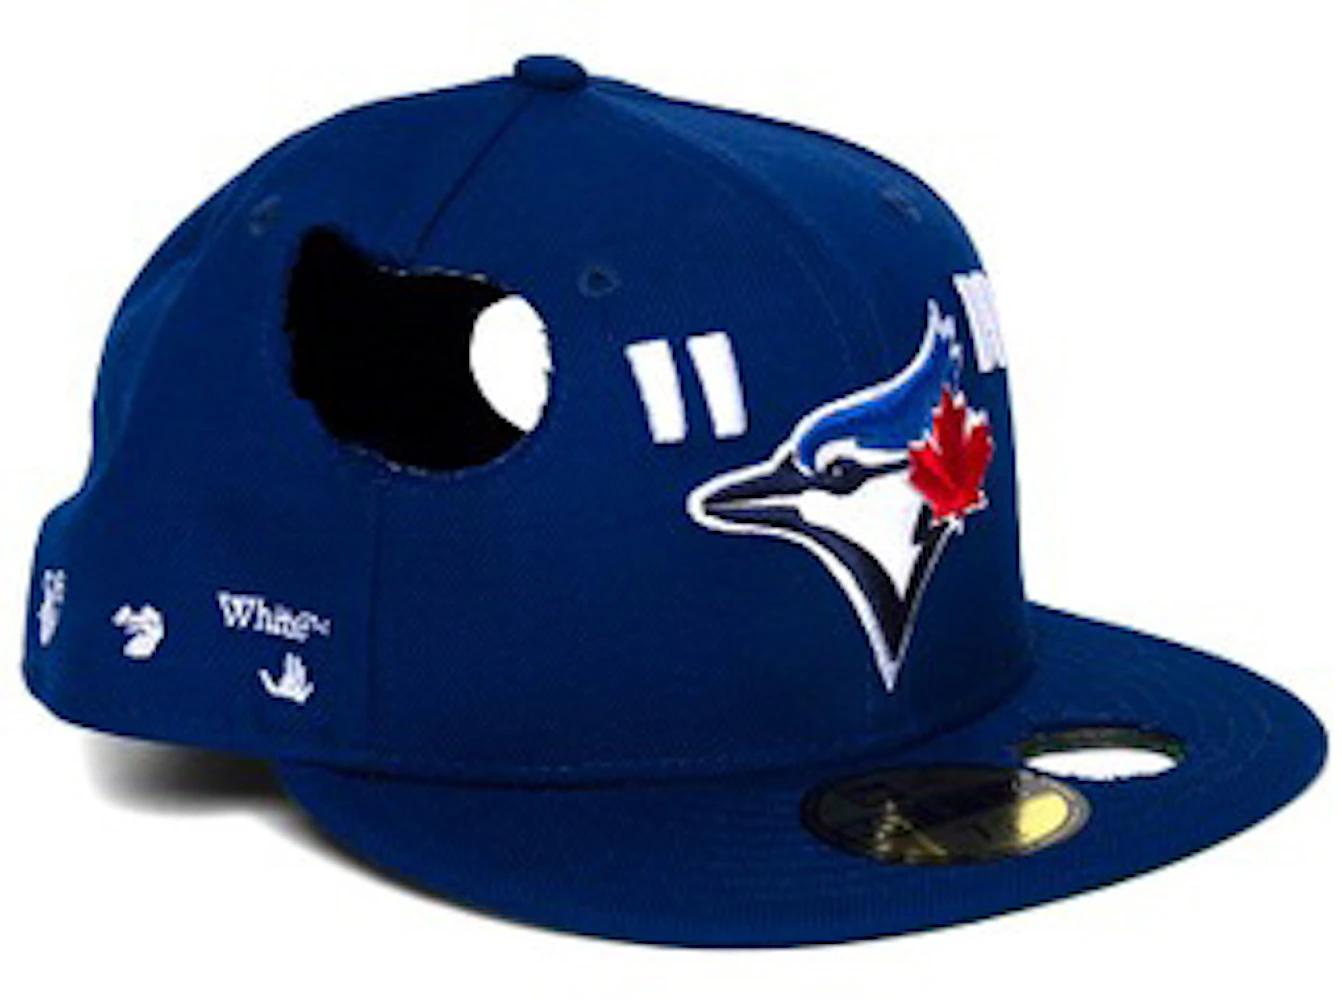 Men's New Era Sky Blue Toronto Blue Jays Logo White 59FIFTY Fitted Hat